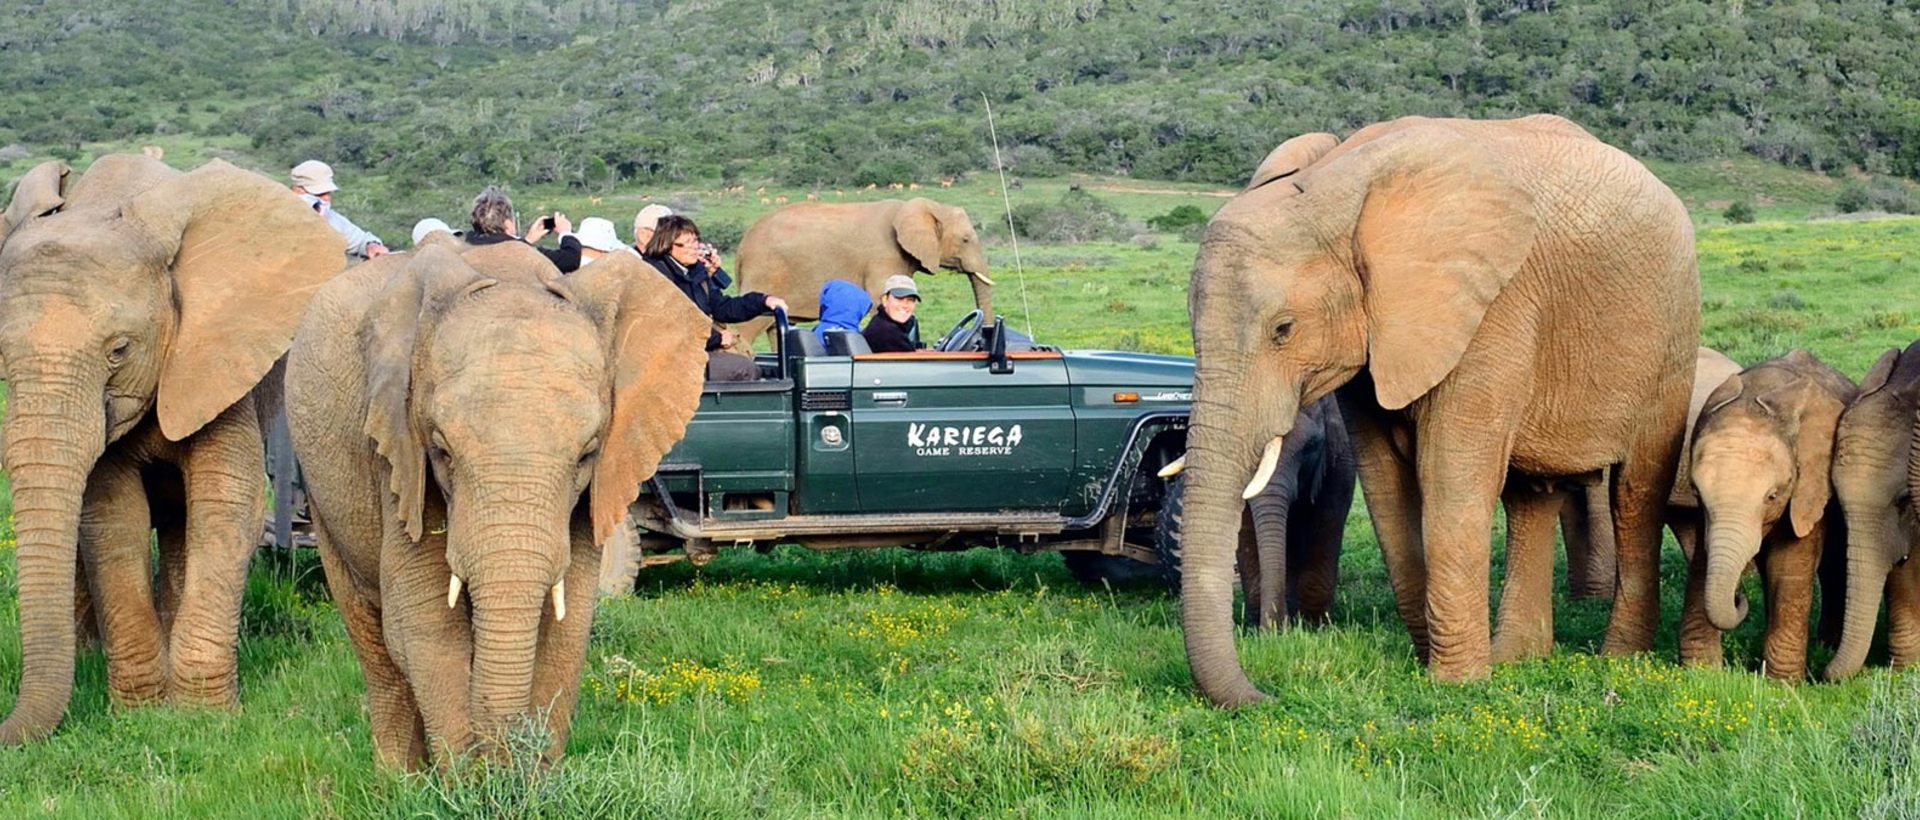 Kariega Elephants Approaching Game Drive Vehicle